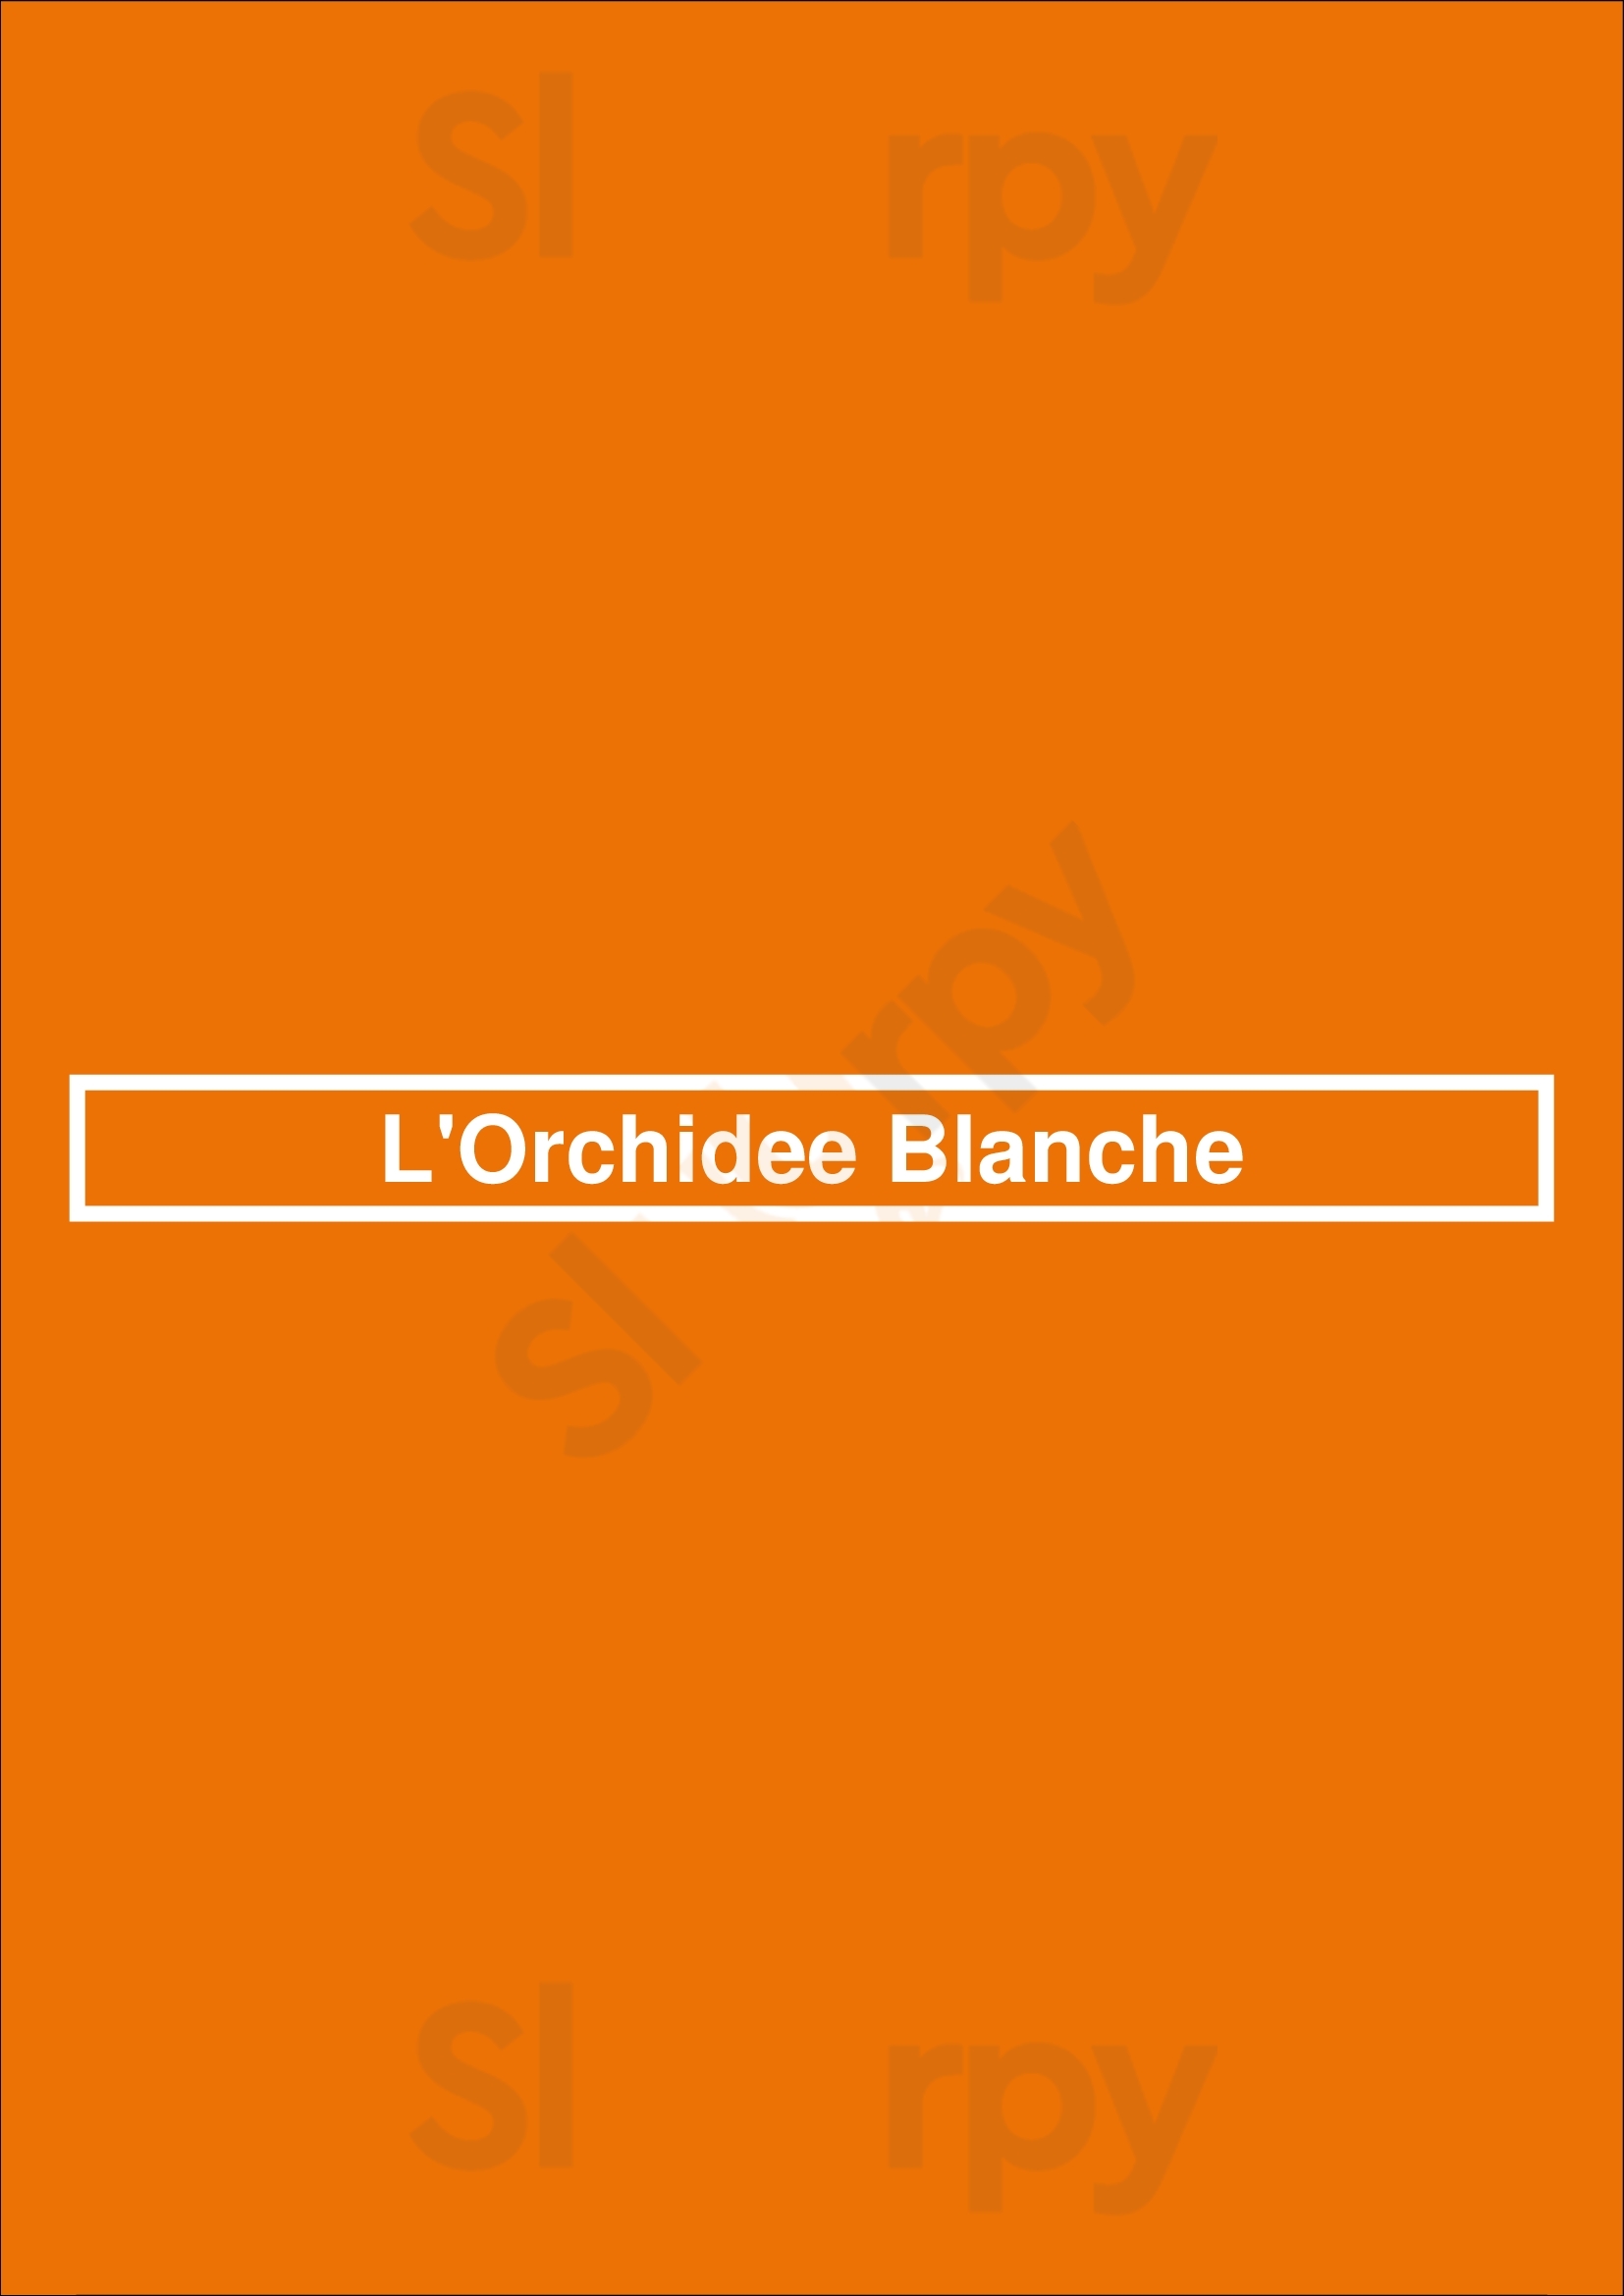 L'orchidee Blanche Bruxelles Menu - 1